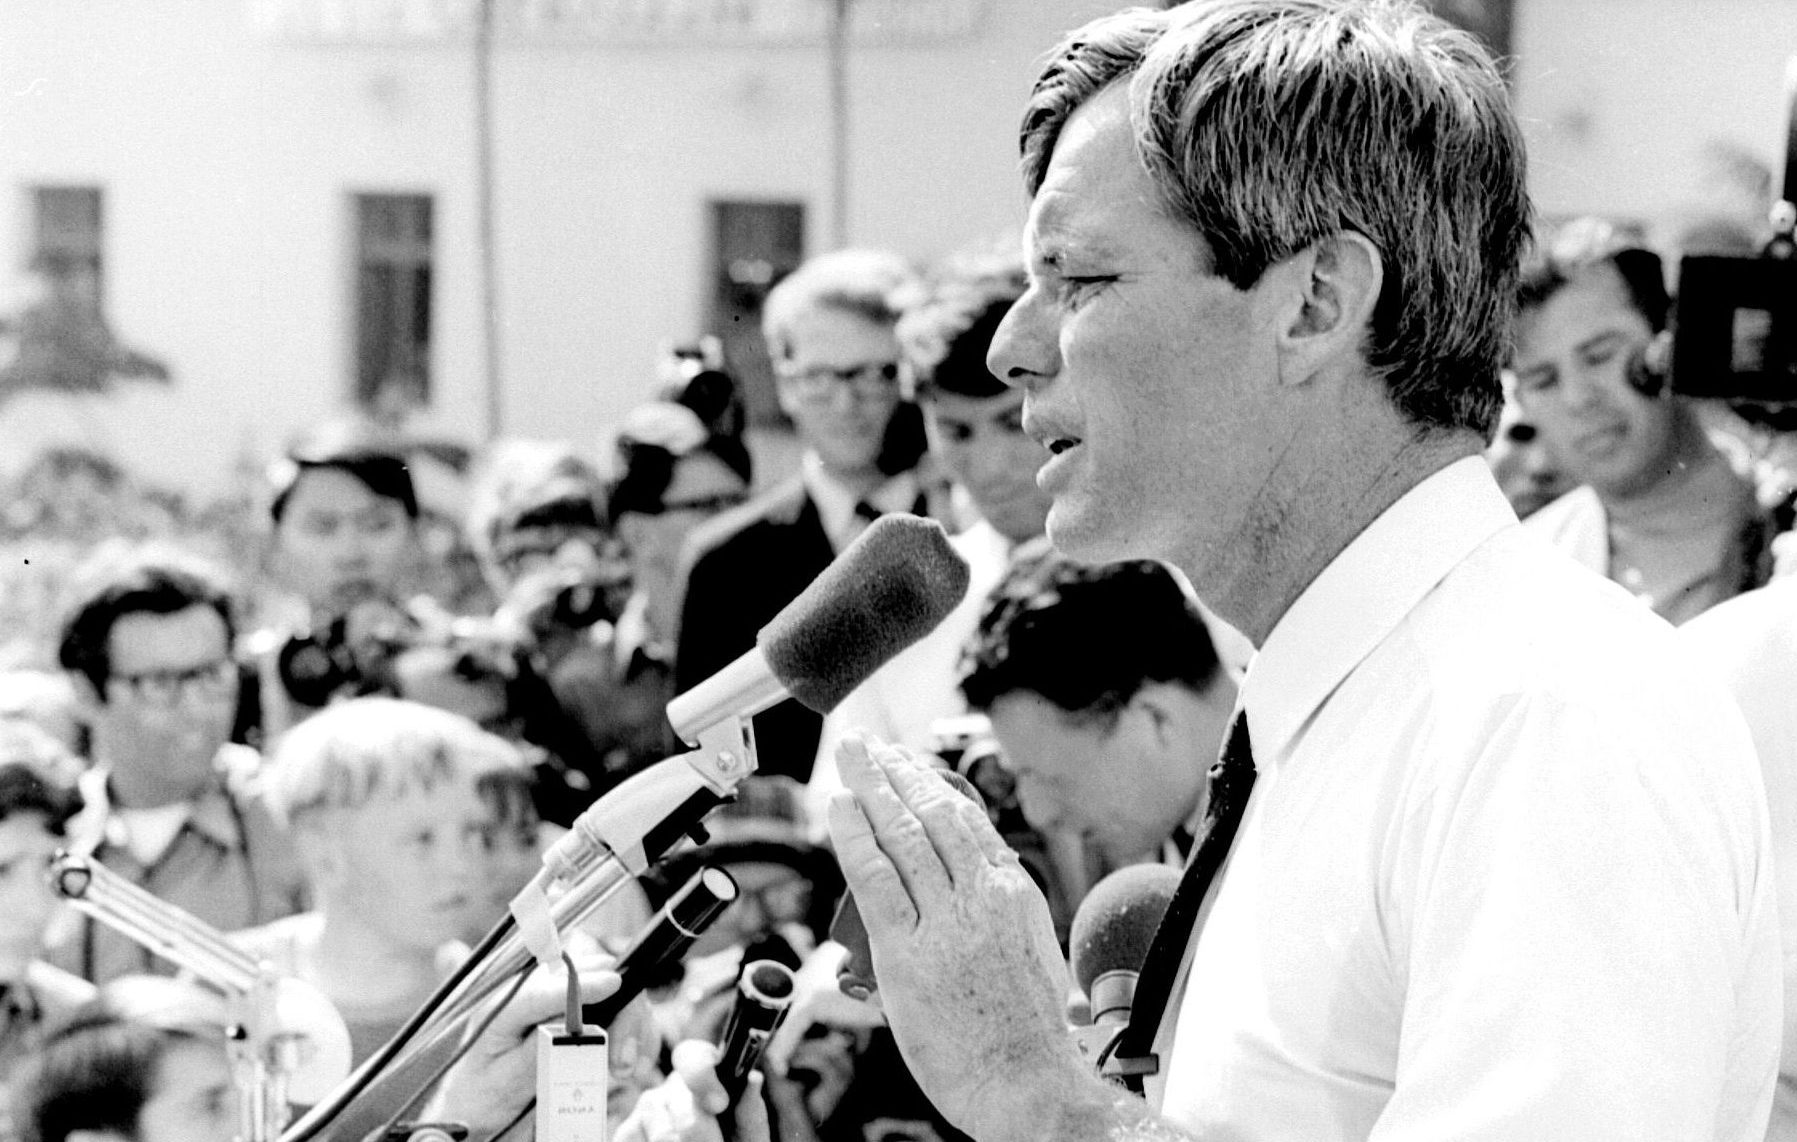 ROBERT F KENNEDY Lunch Break 1960 JFK Campaign PHOTO 137-q 